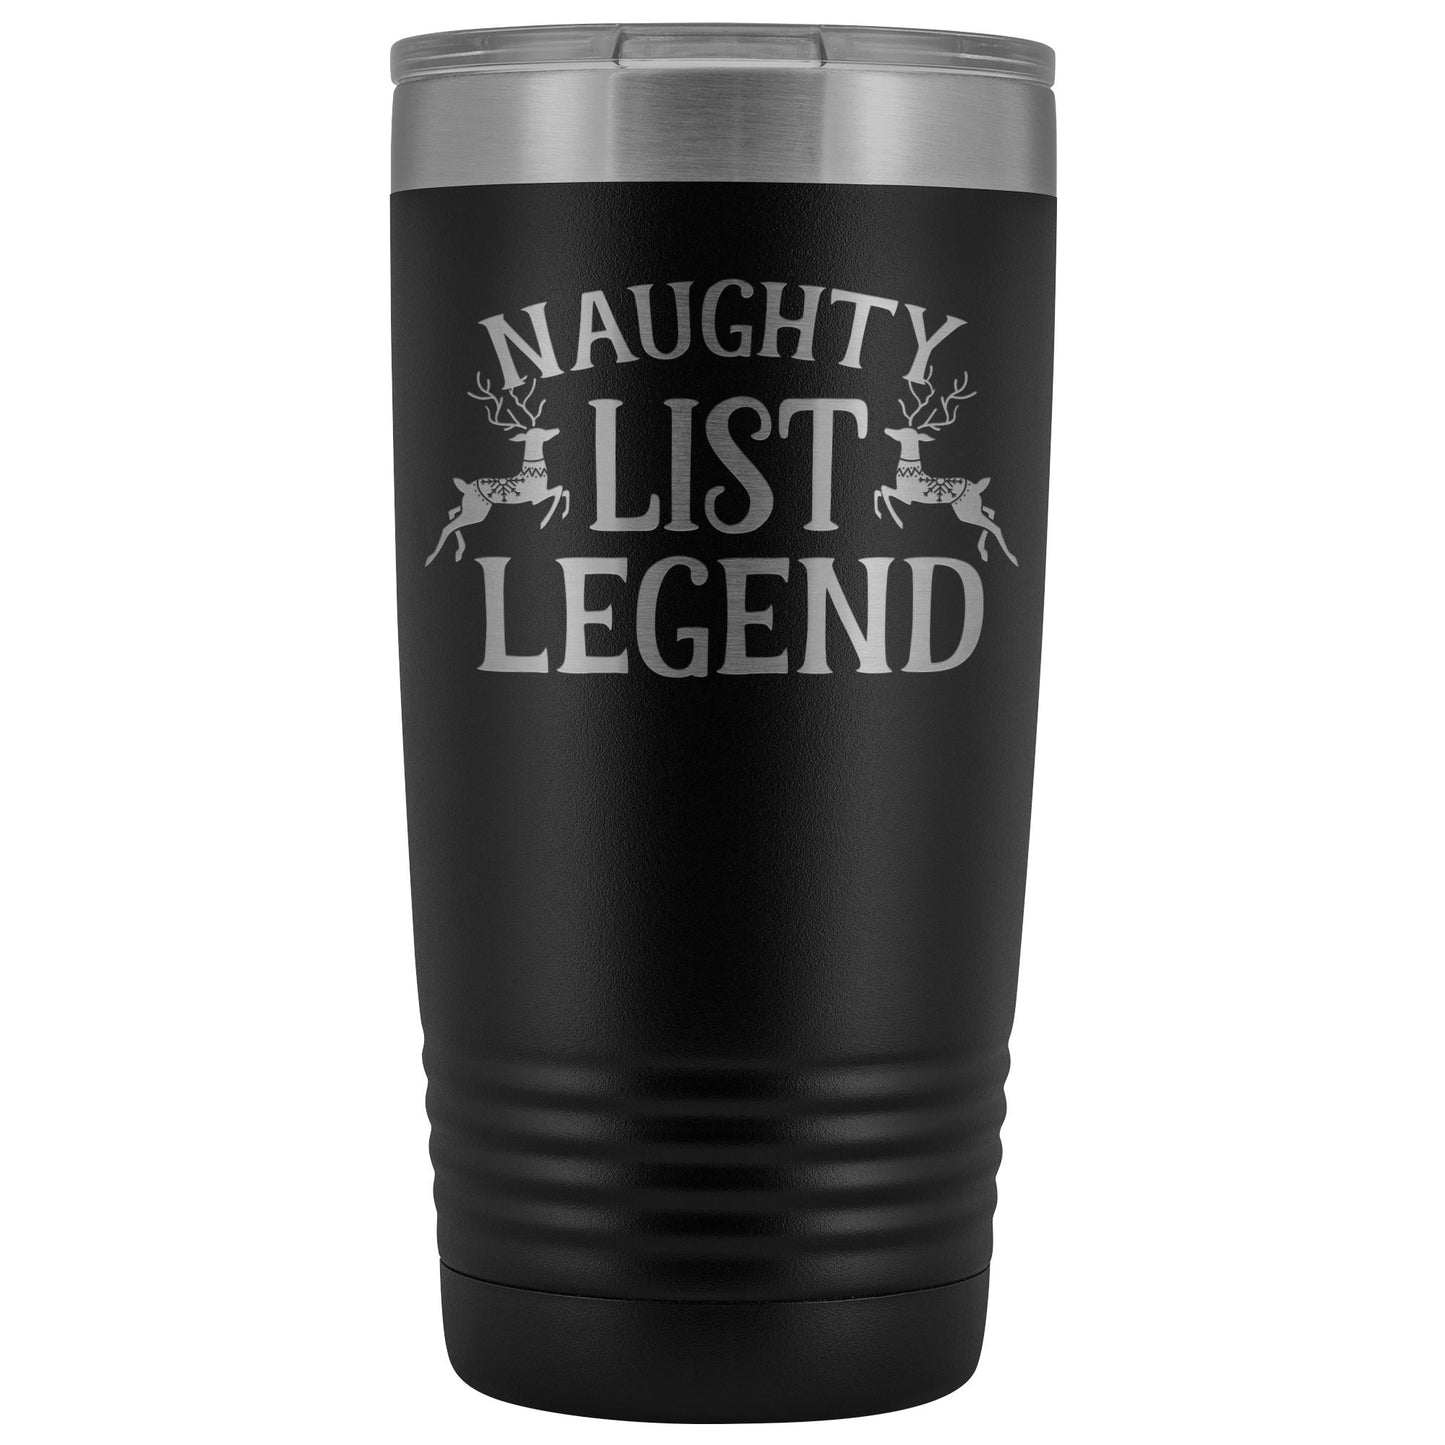 Naughty List Legend 20oz Insulated Coffee Tumbler